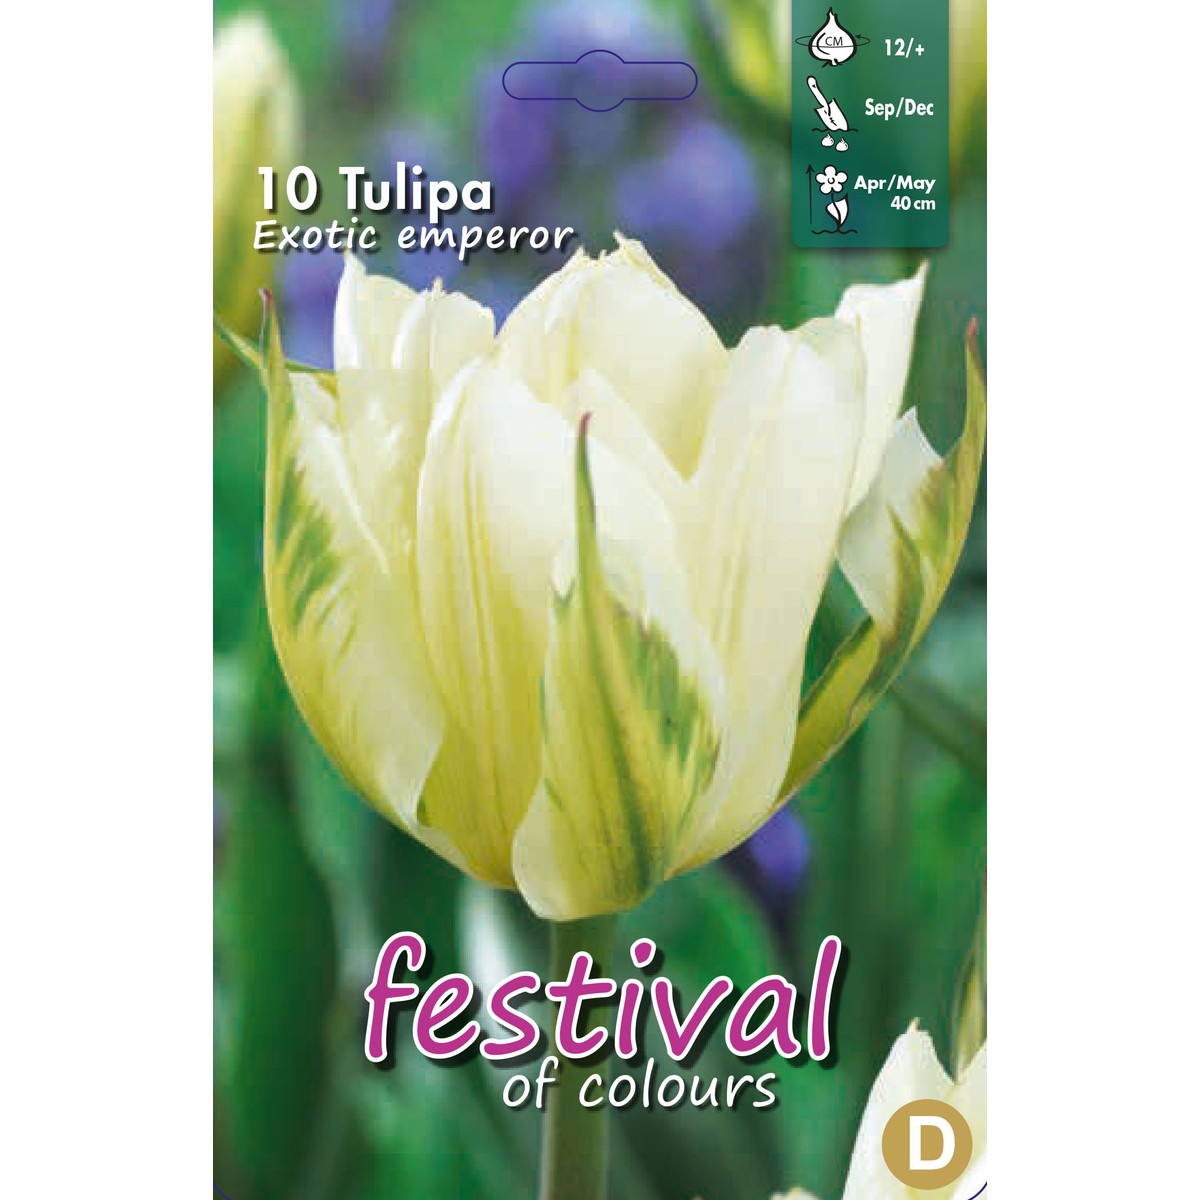   Tulipes 'Exotic Emperor'  10 pcs 12/+